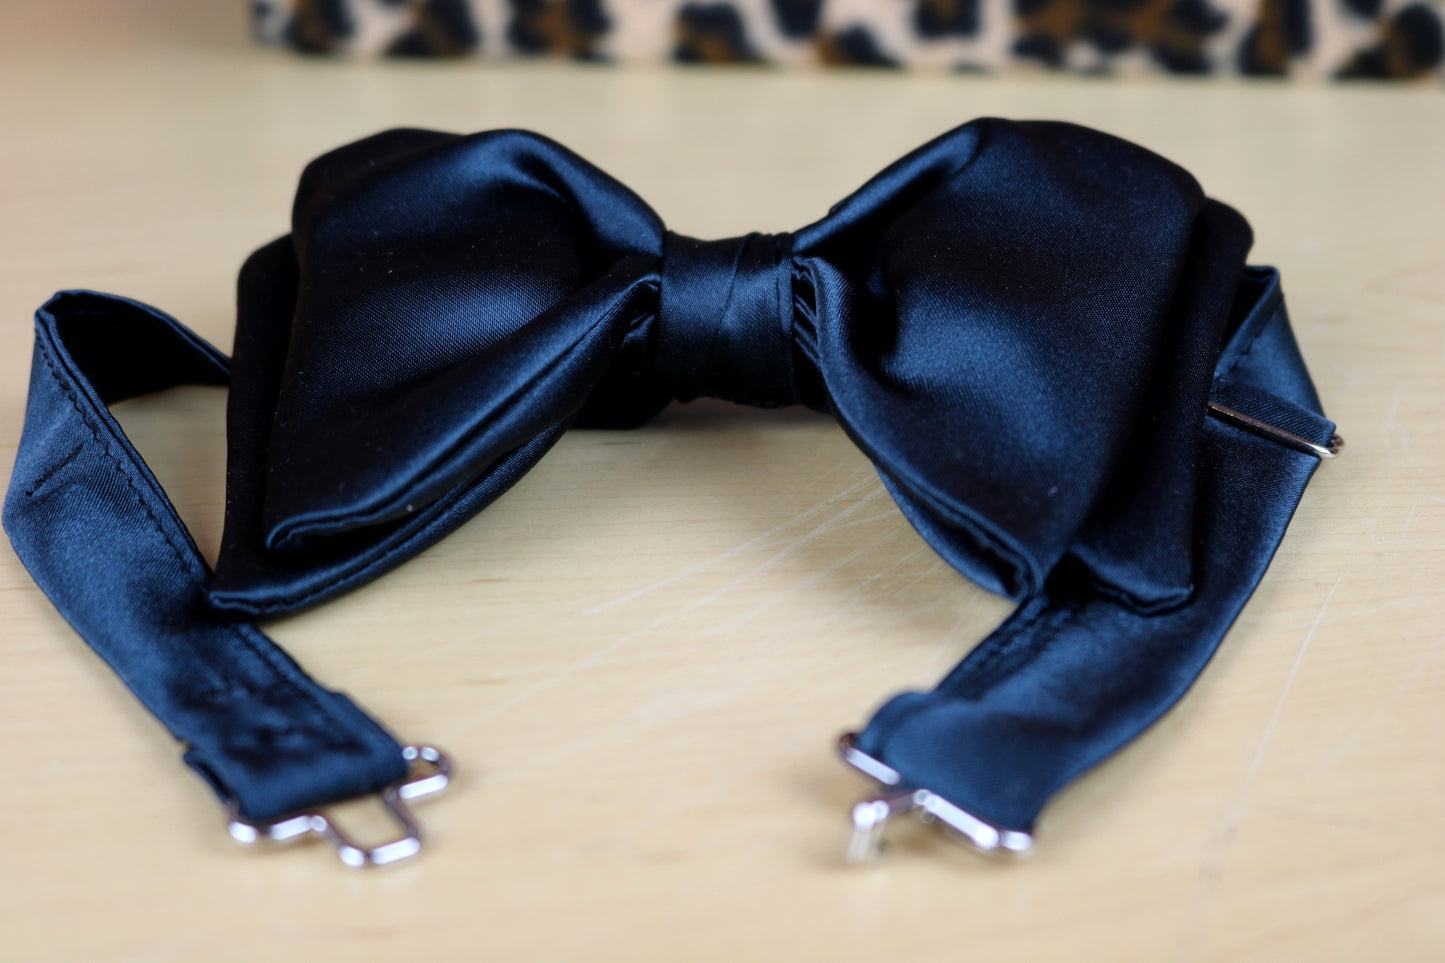 The Walgen Black Satin Formal Bow Tie